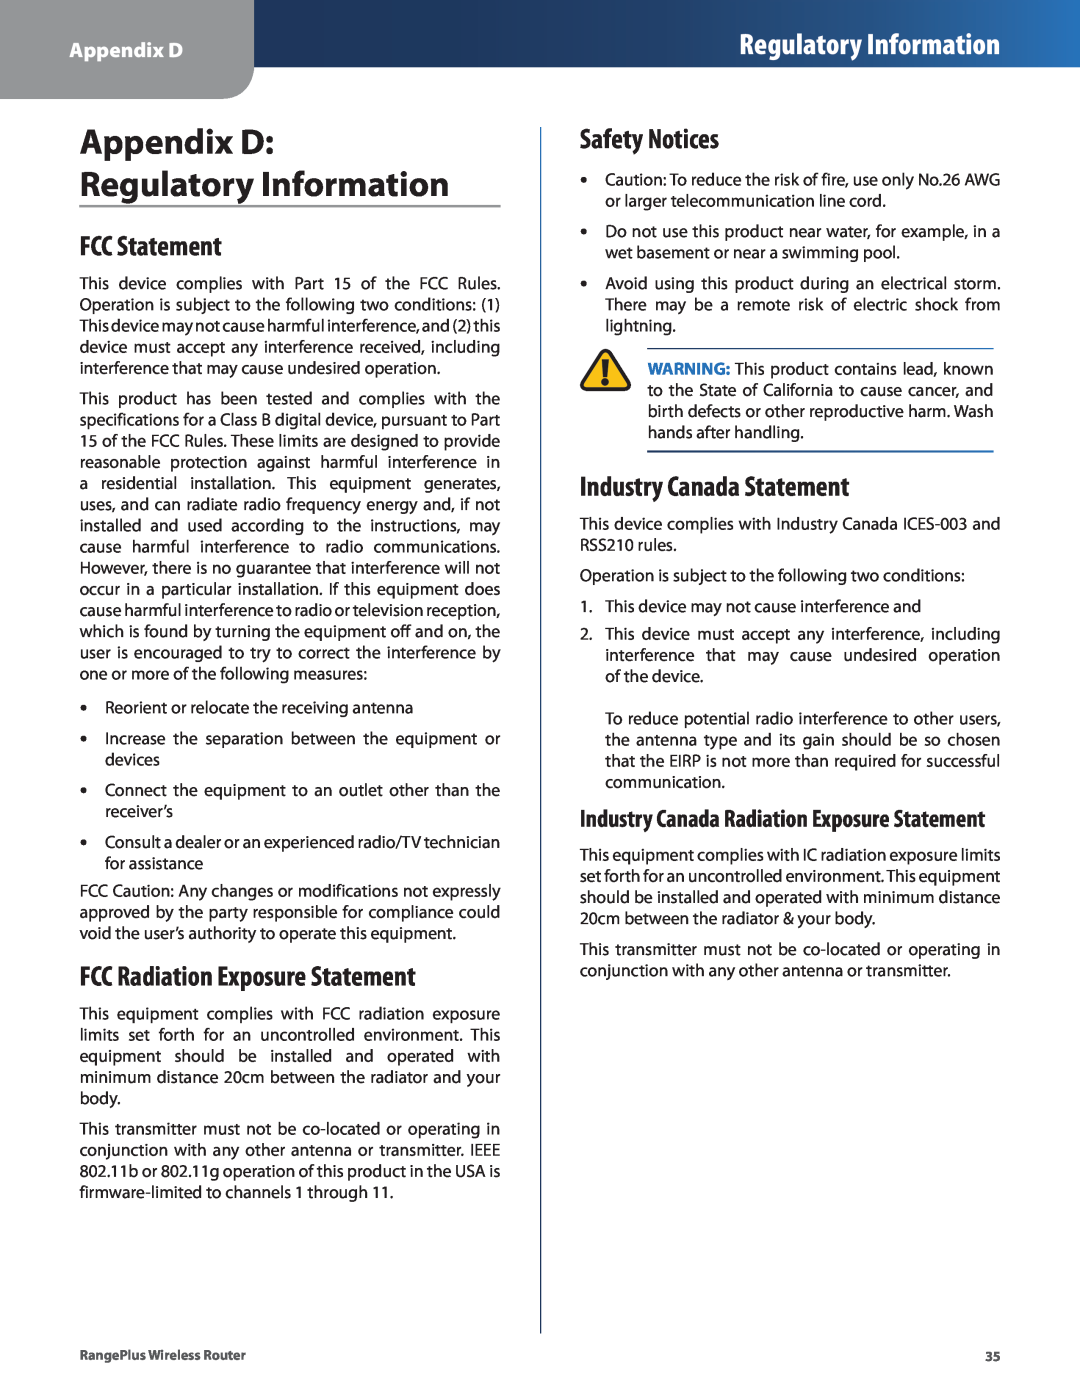 Cisco Systems WRT110 Appendix D Regulatory Information, FCC Statement, FCC Radiation Exposure Statement, Safety Notices 